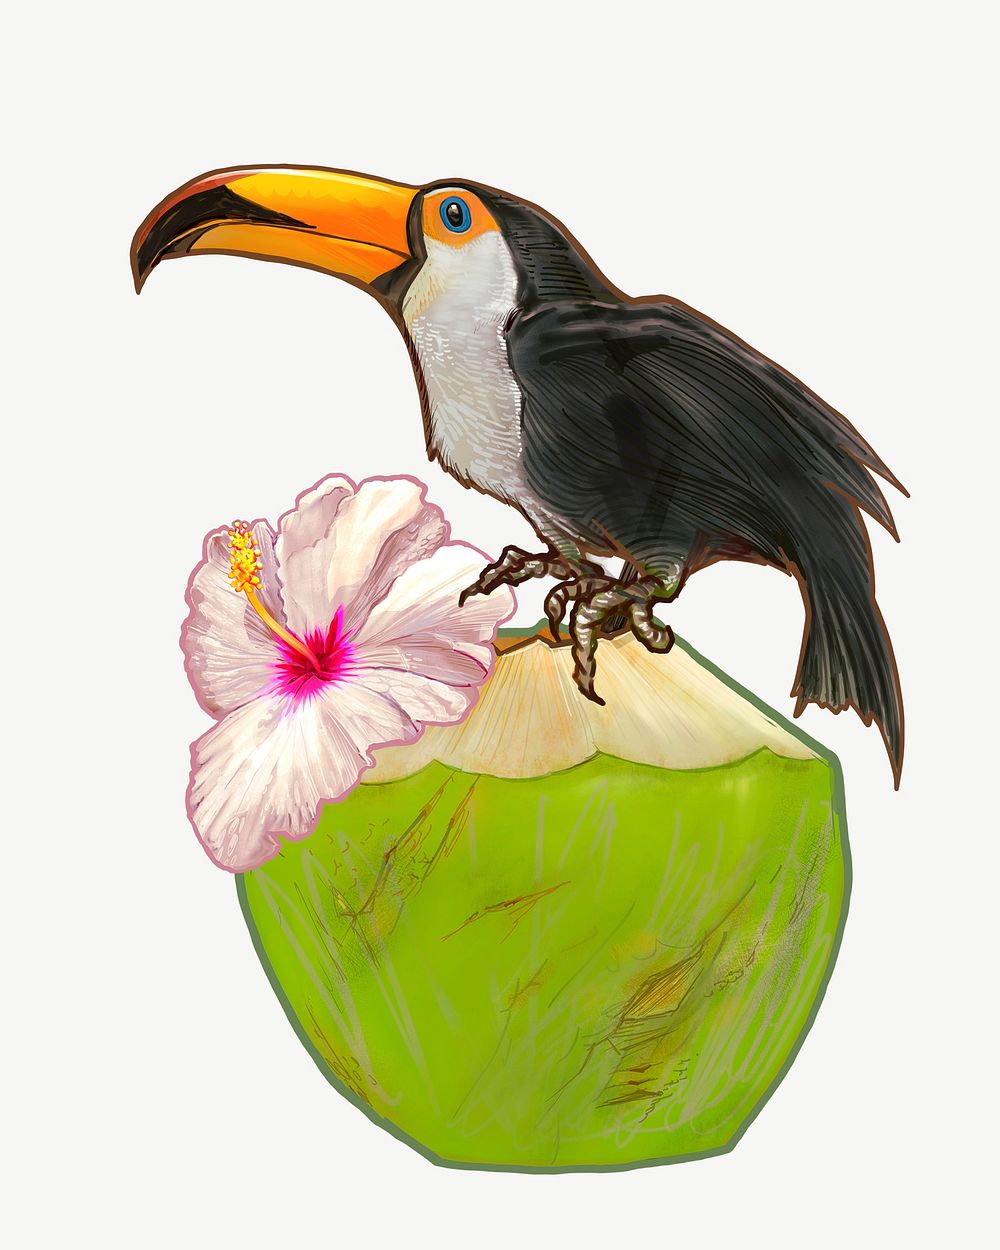 Toucan bird illustration collage element psd